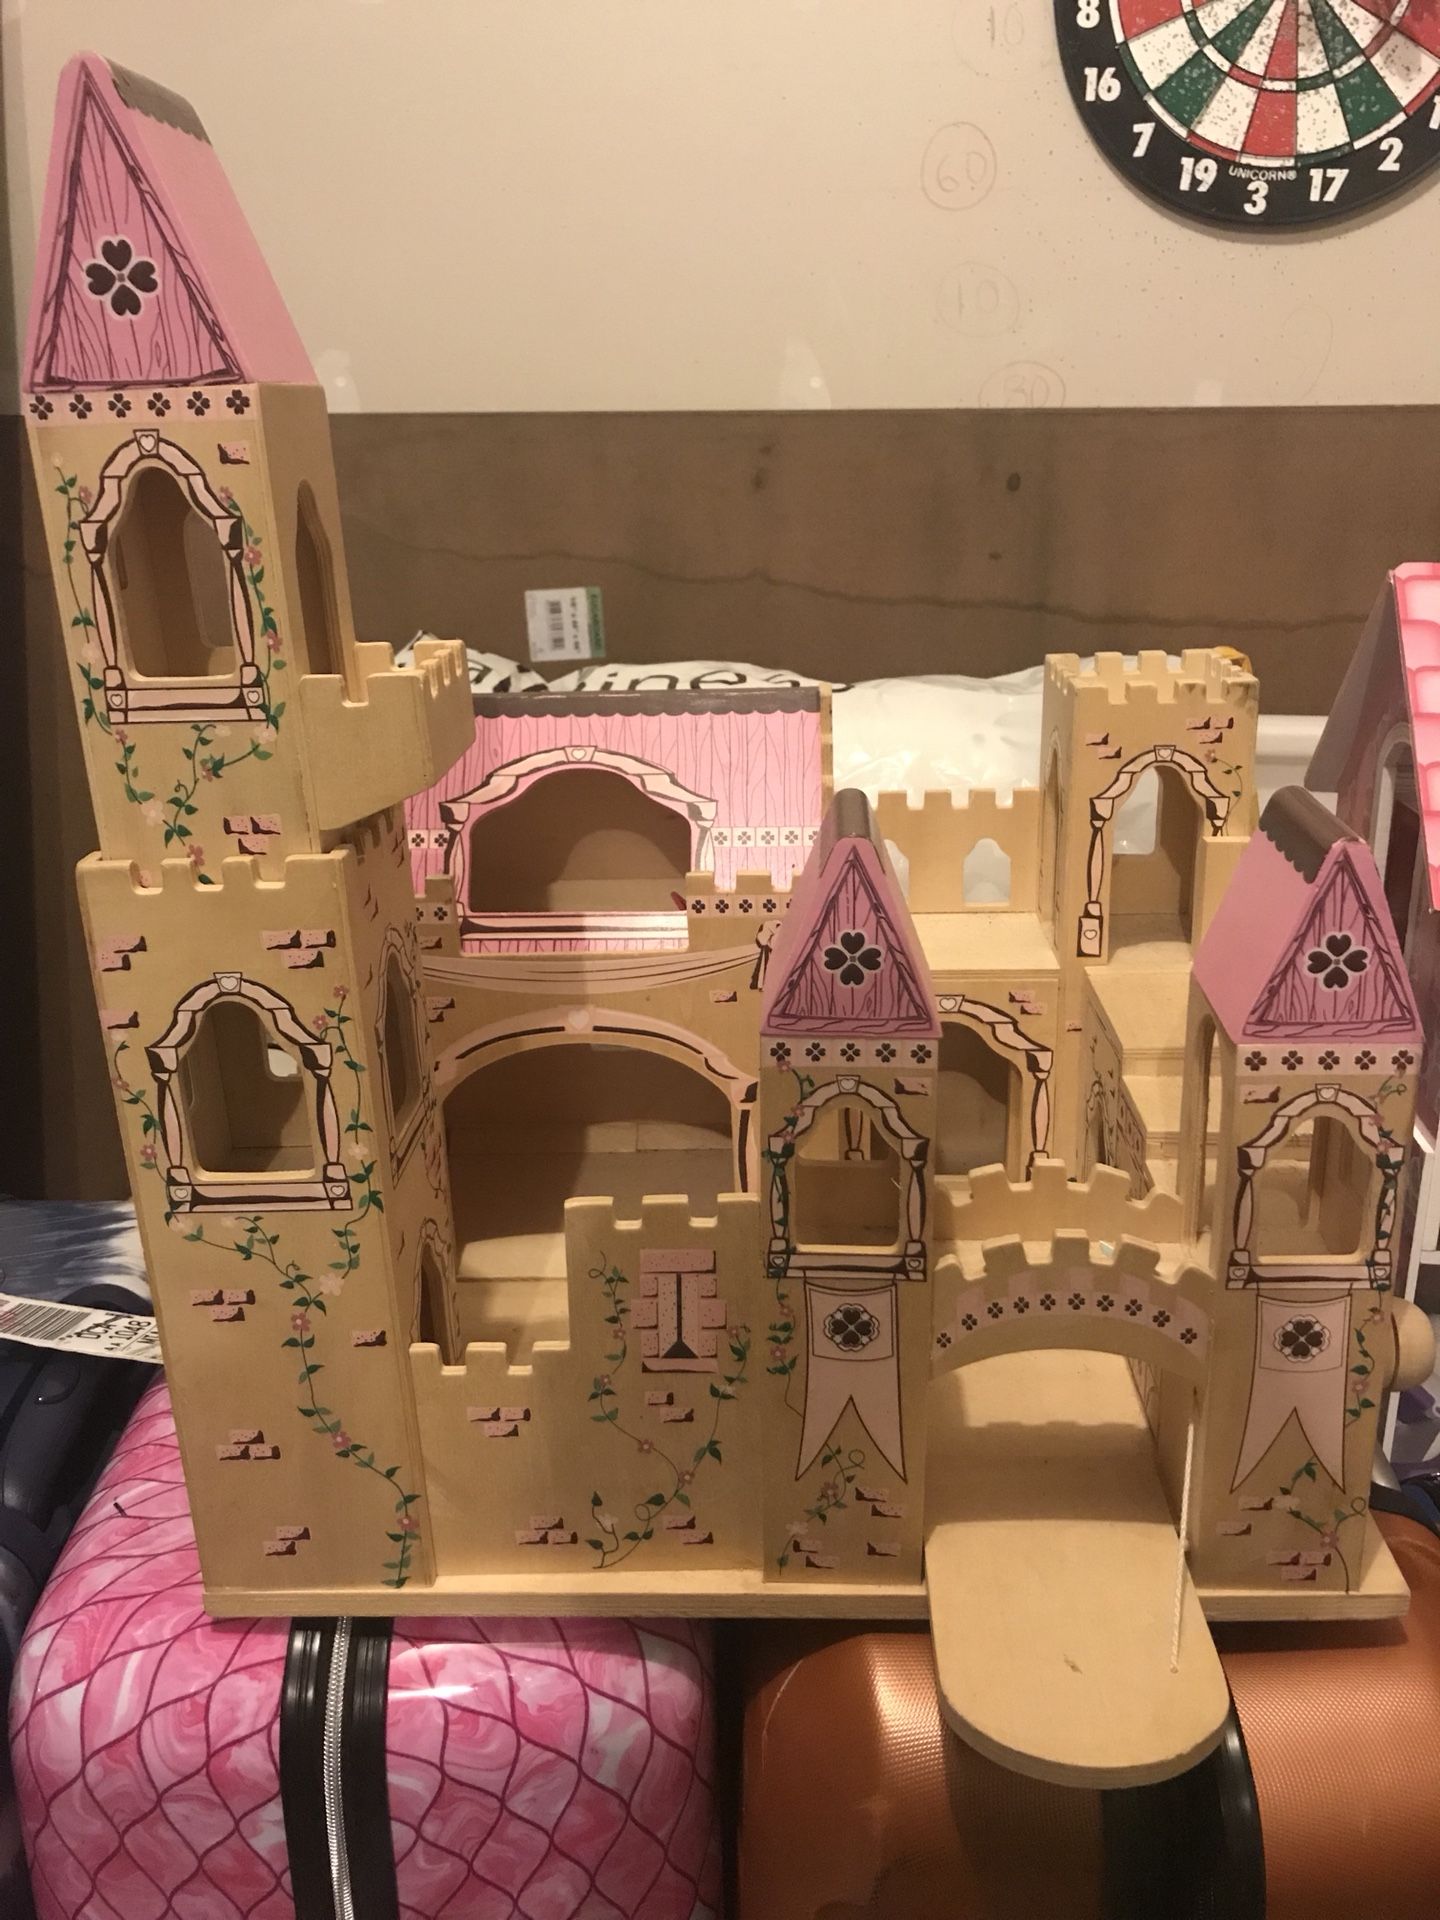 Folding Princess castle Wooden w/ Drawbridge and turrets